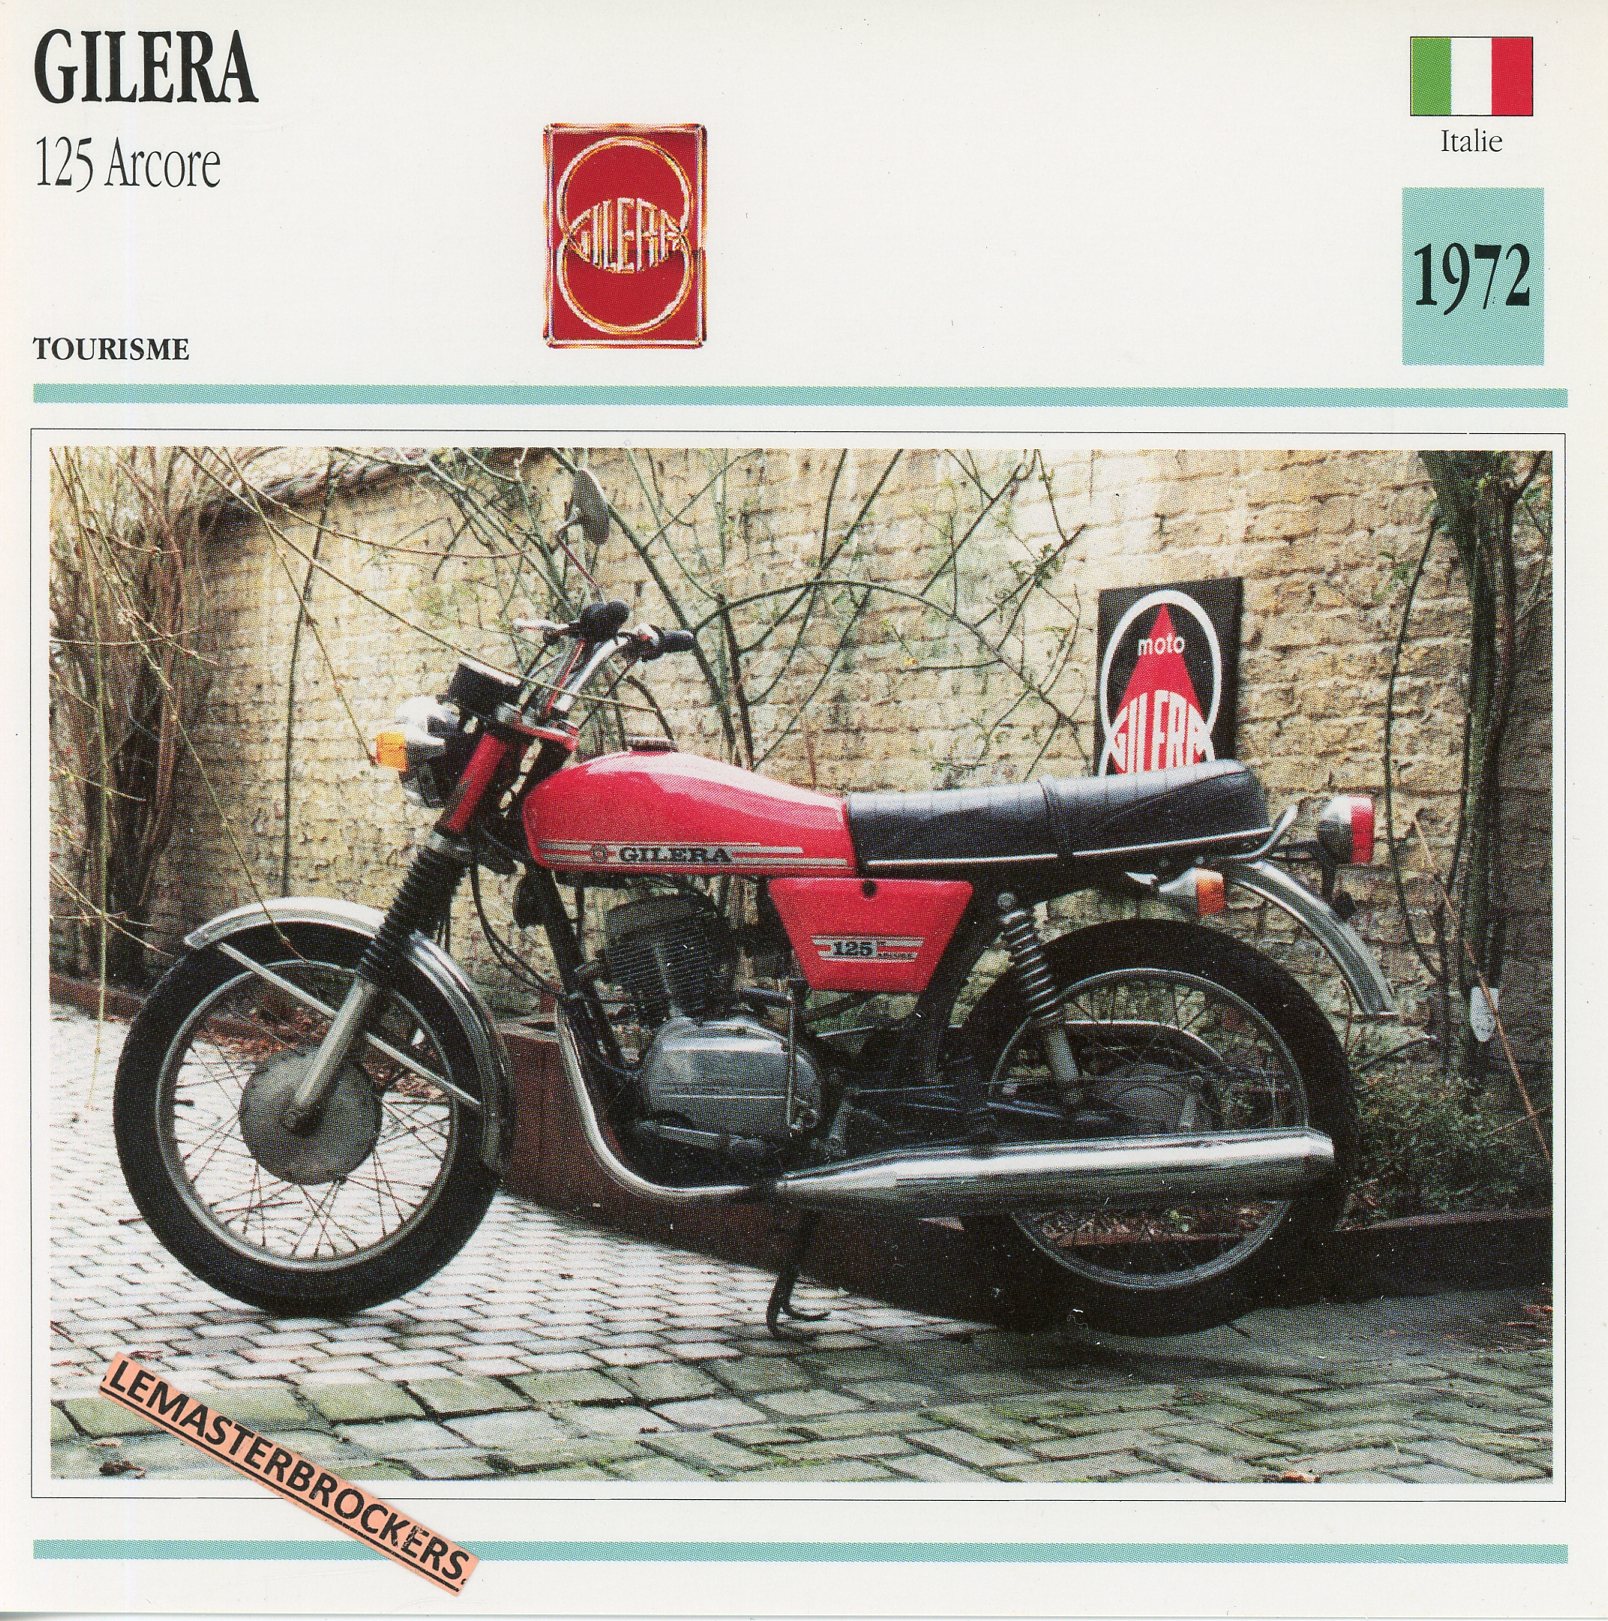 GILERA-125-ARCORE-1972-FICHE-MOTO-MOTORCYCLE-CARDS-ATLAS-LEMASTERBROCKERS